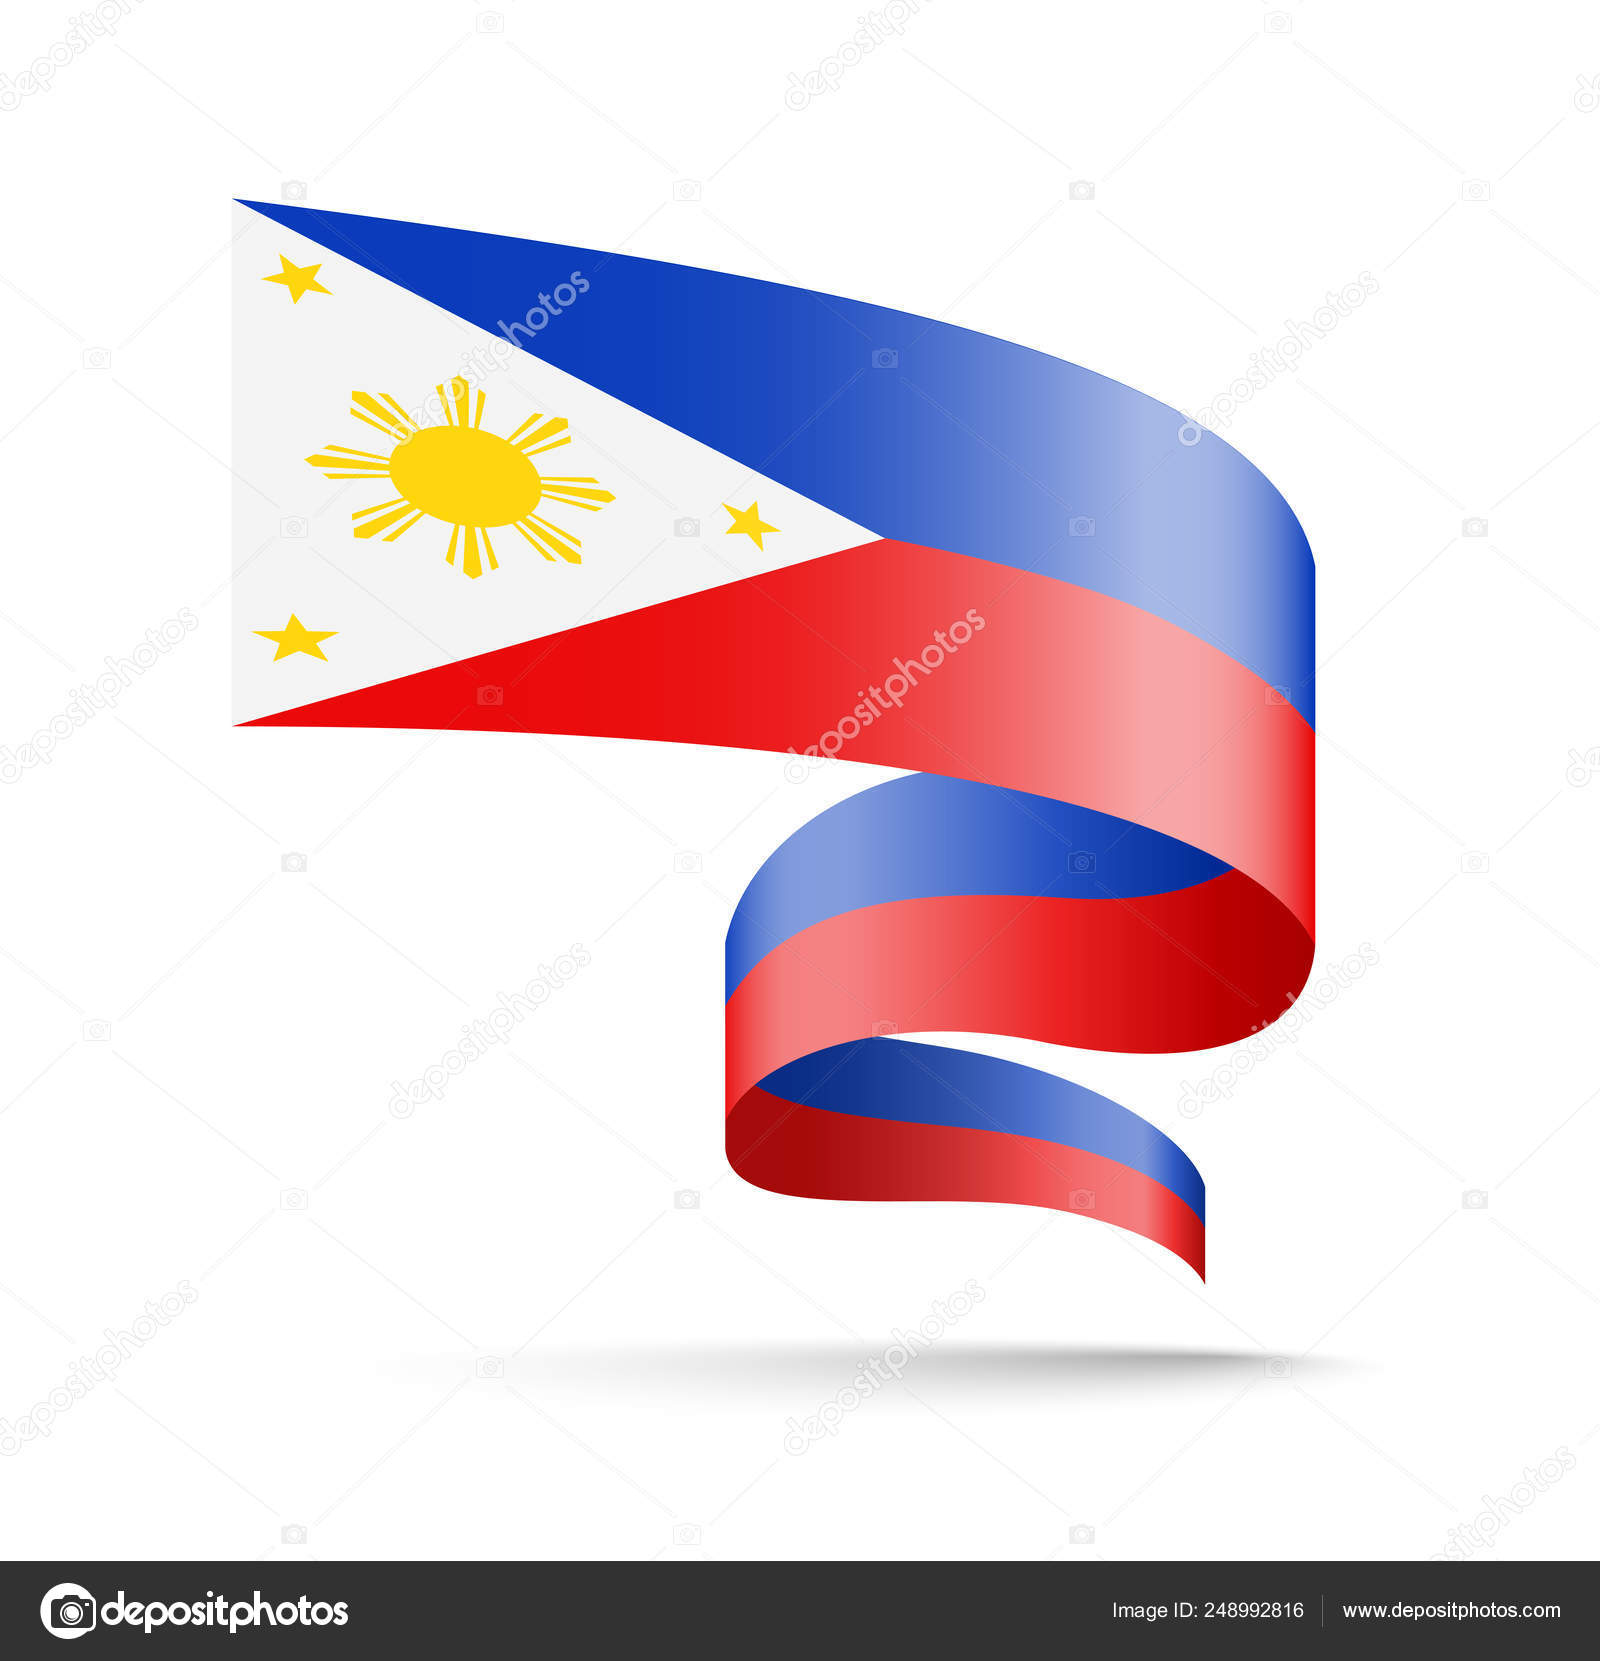 1 6 Philippine Flag Vector Images Philippine Flag Illustrations Depositphotos